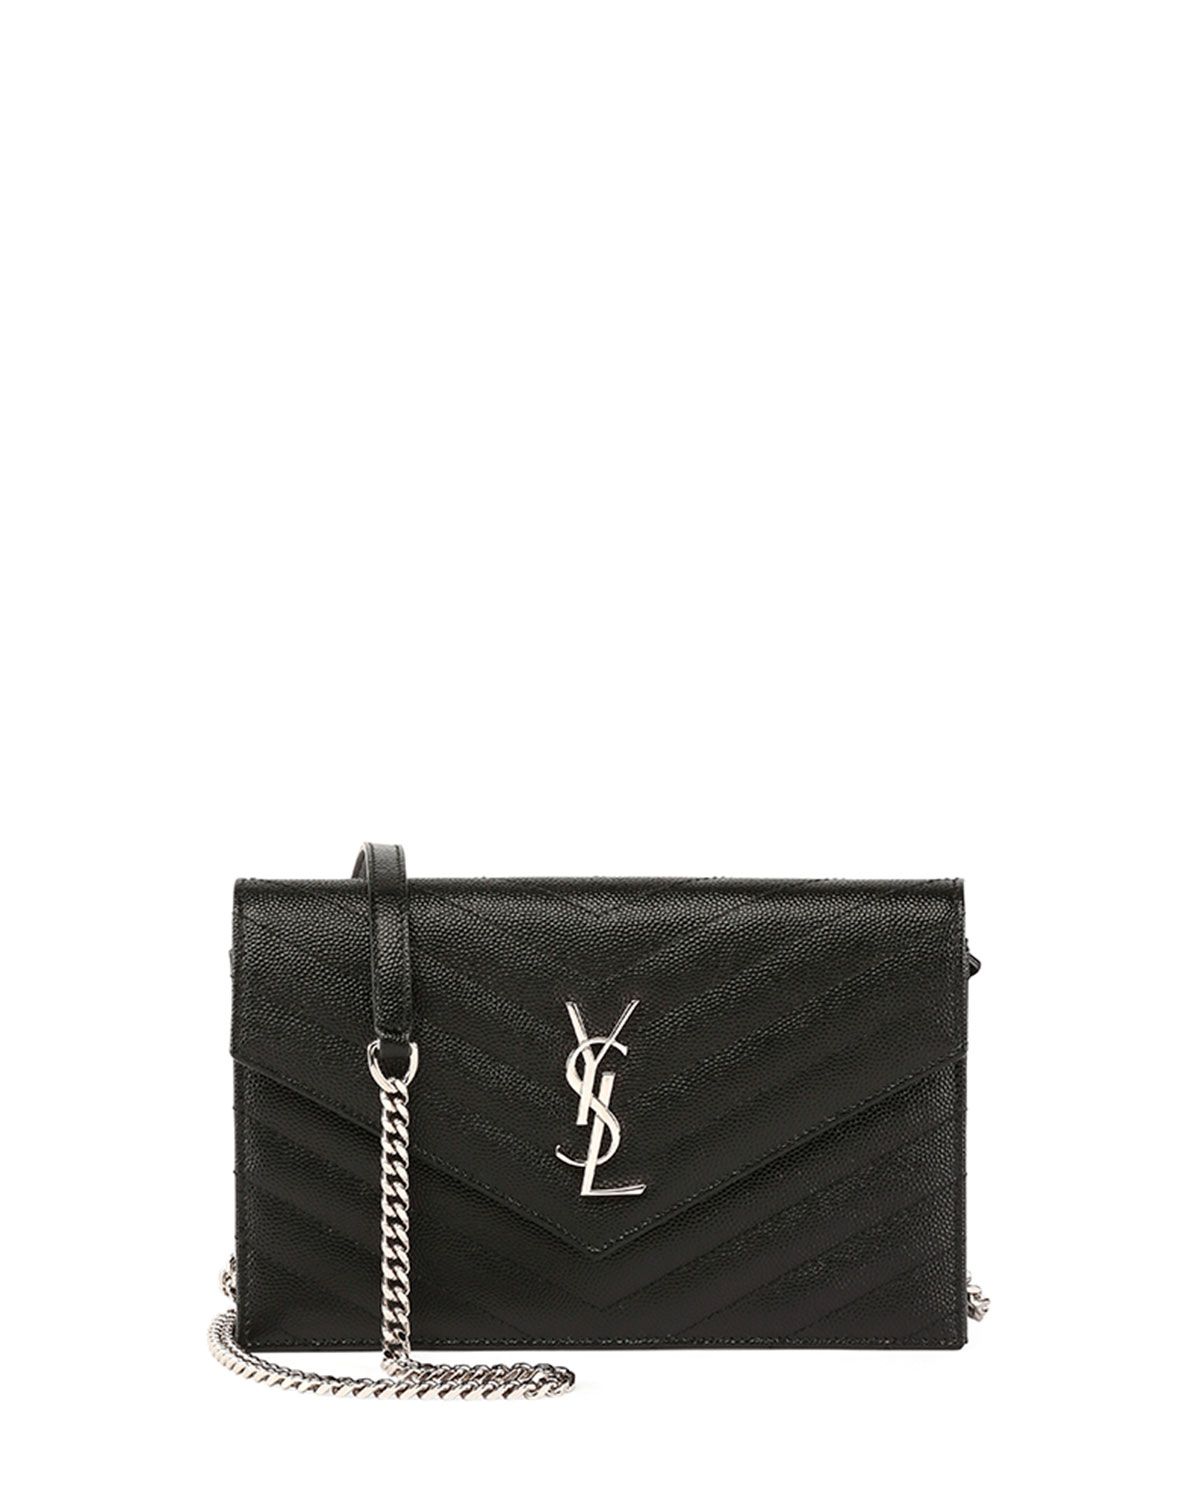 Monogram YSL Wallet on a Chain, Black | Neiman Marcus